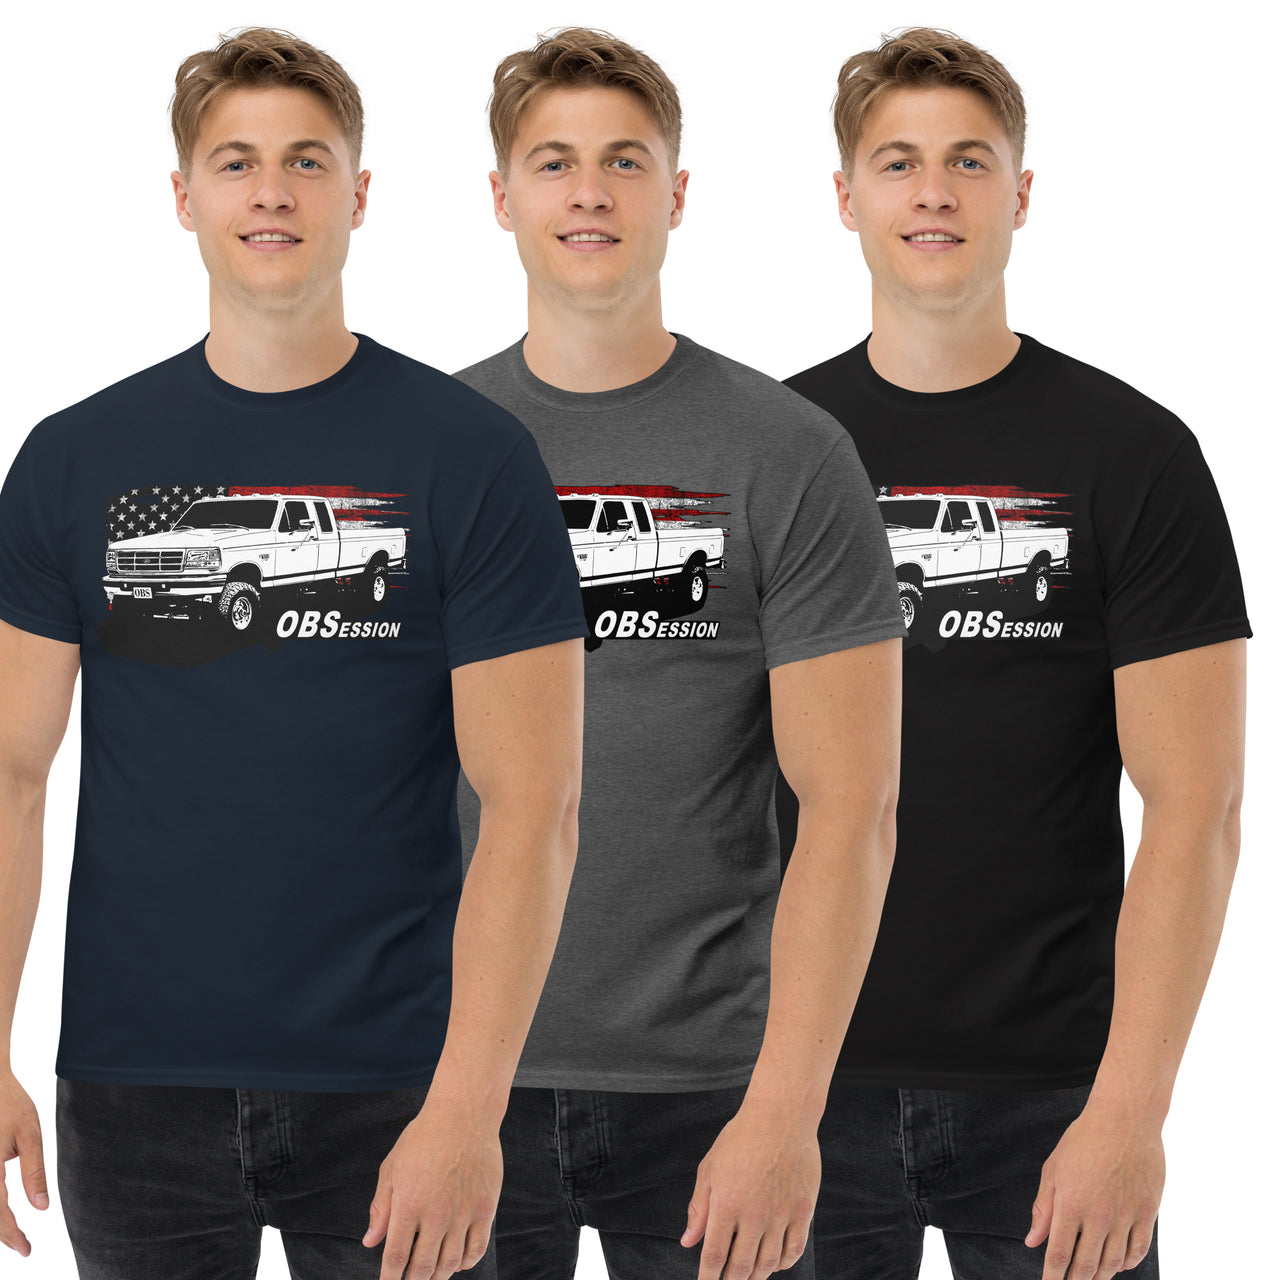 Patriotic OBS Ext Cab Truck T-shirt modeled